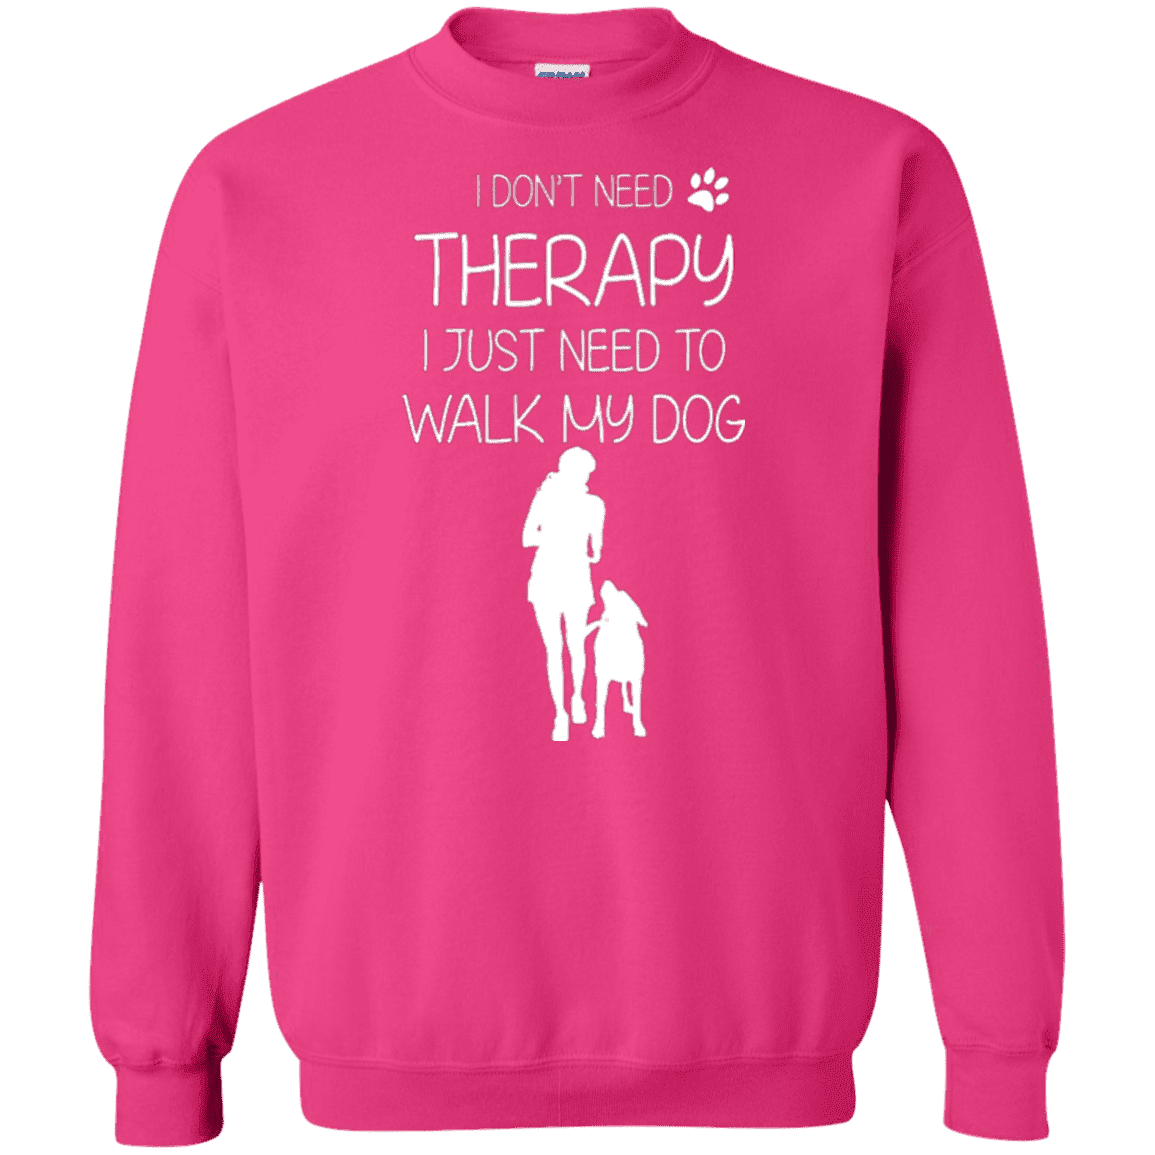 I Don't Need Therapy - Sweatshirt.